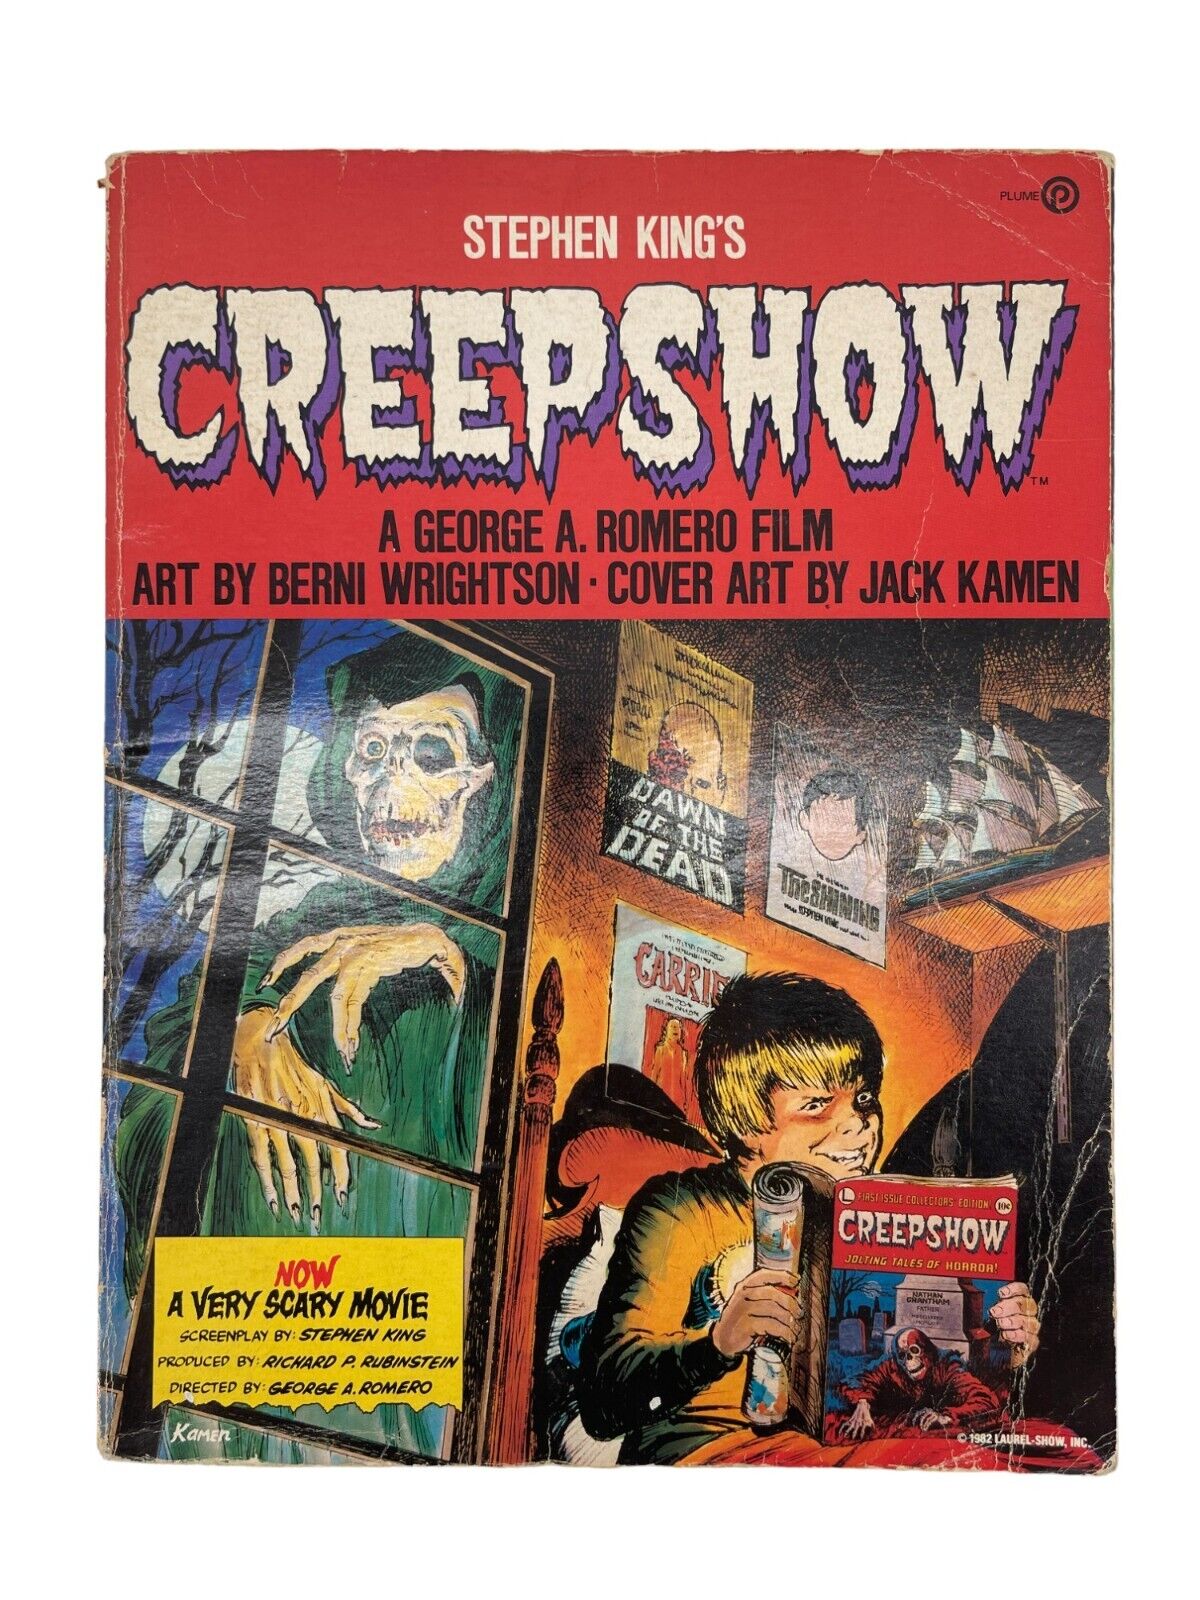 Stephen King's CREEPSHOW comic book